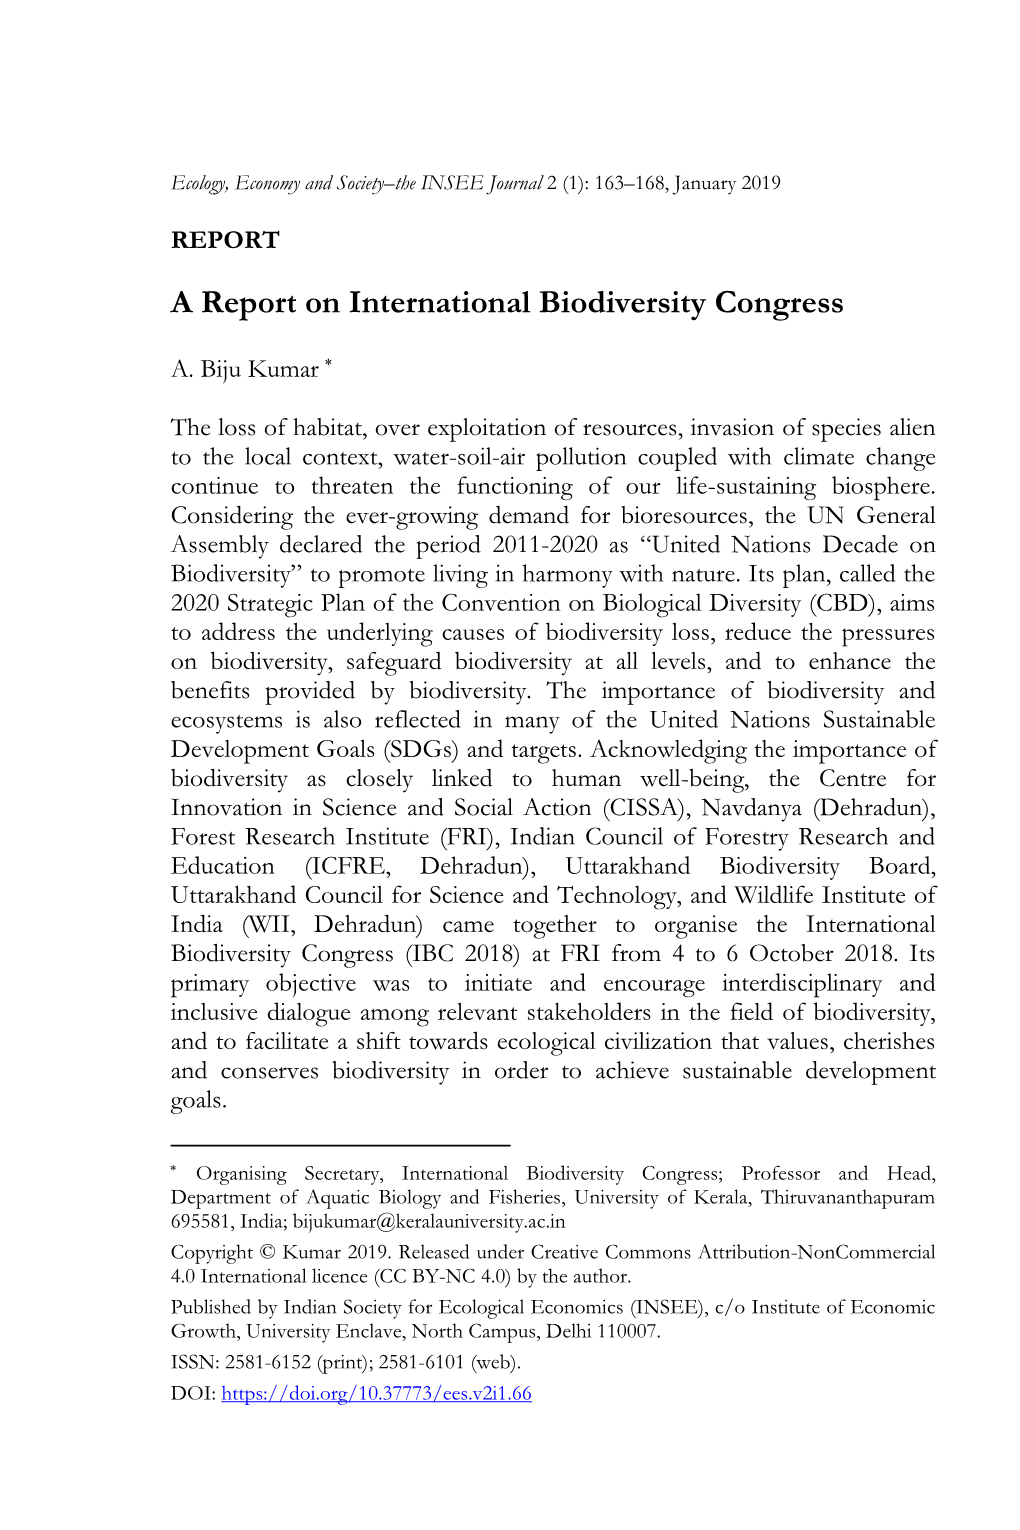 A Report on International Biodiversity Congress